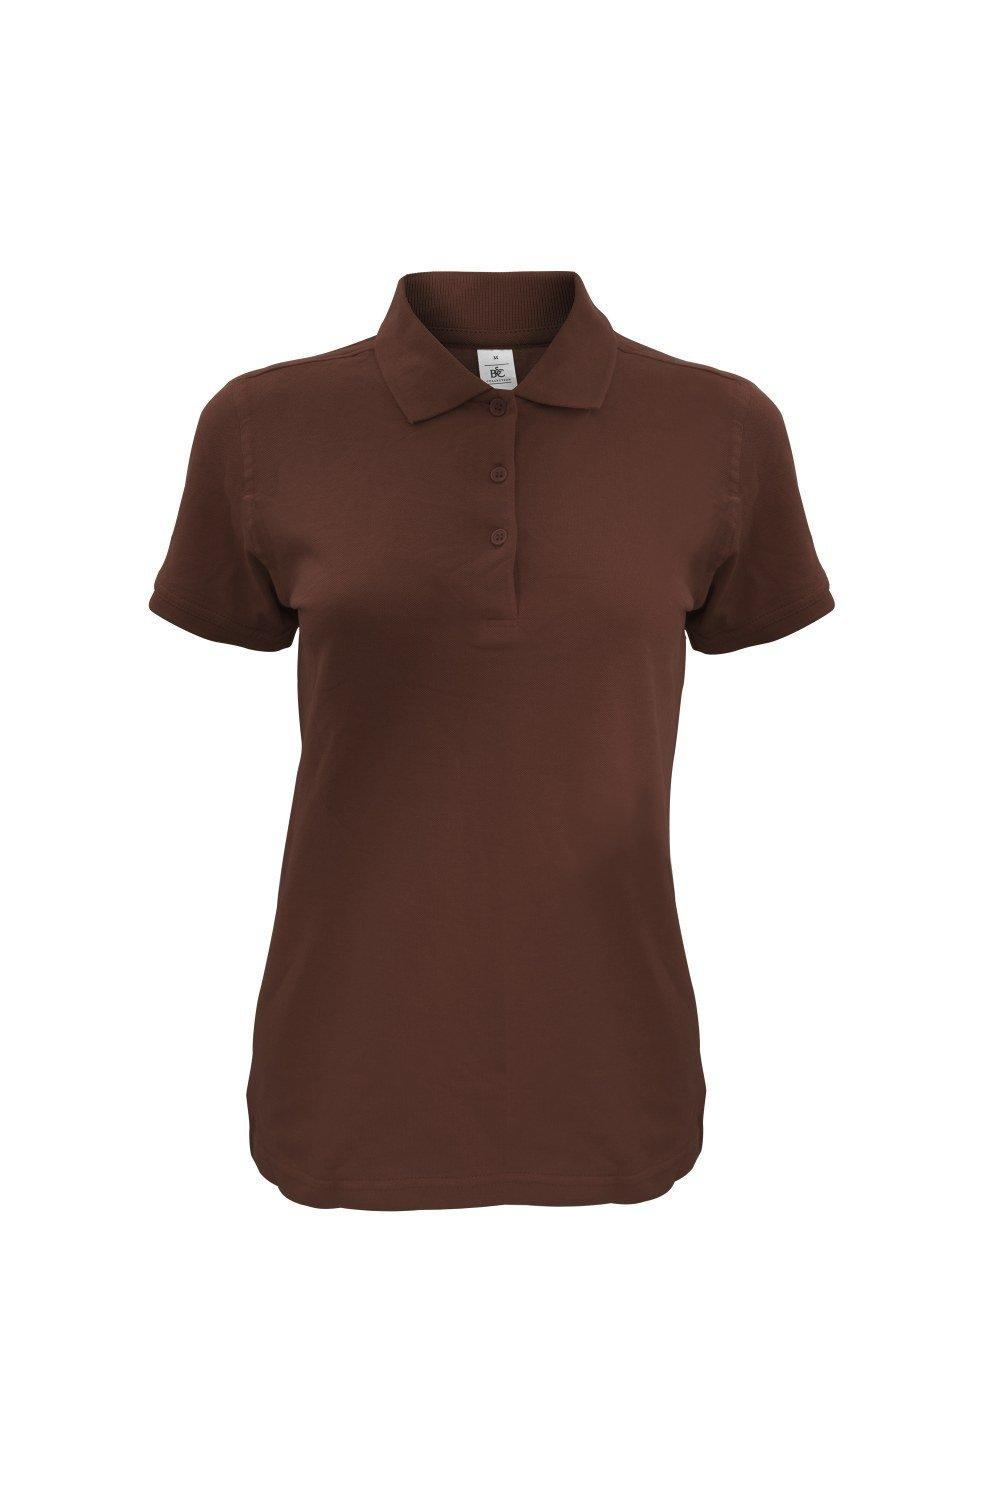 Рубашка-поло Safran Timeless B&C, коричневый